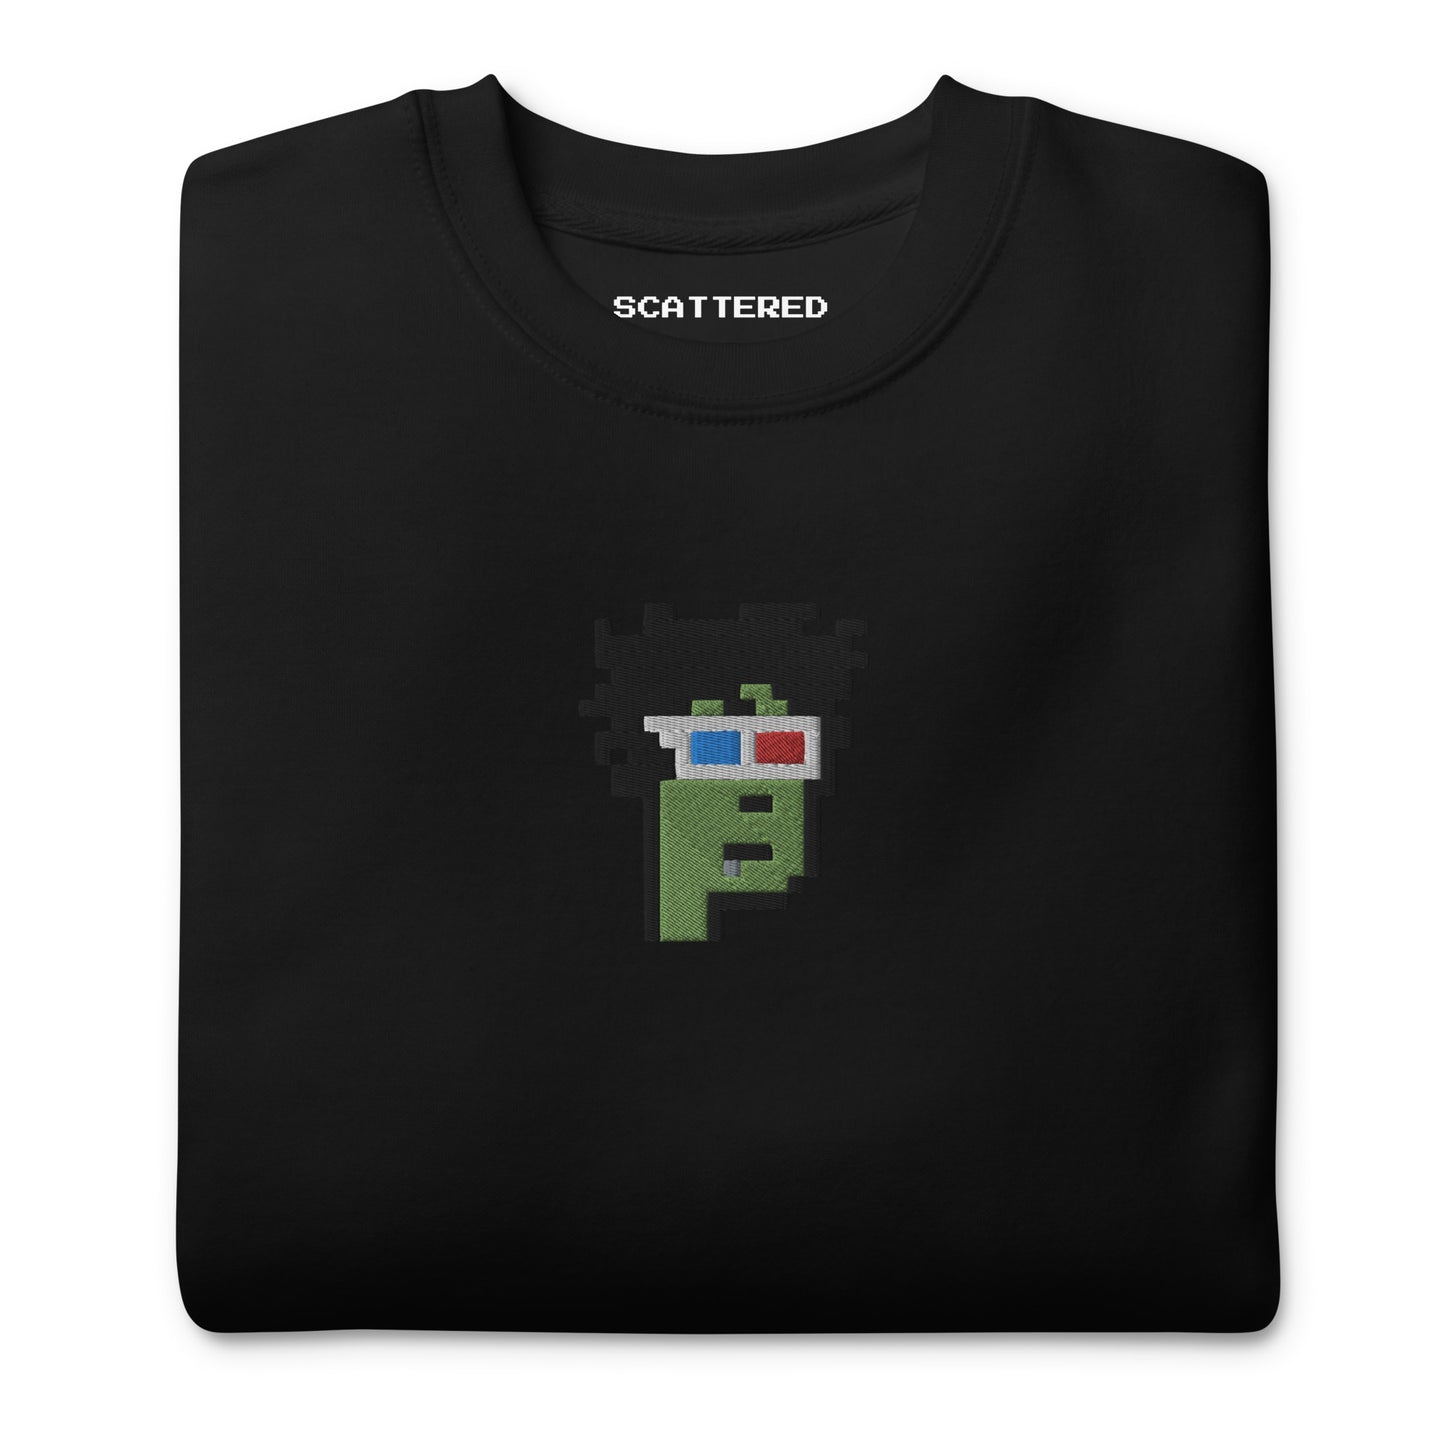 Crypto Punks Zombie NFT #8857 Premium Embroidered Crewneck Sweatshirt